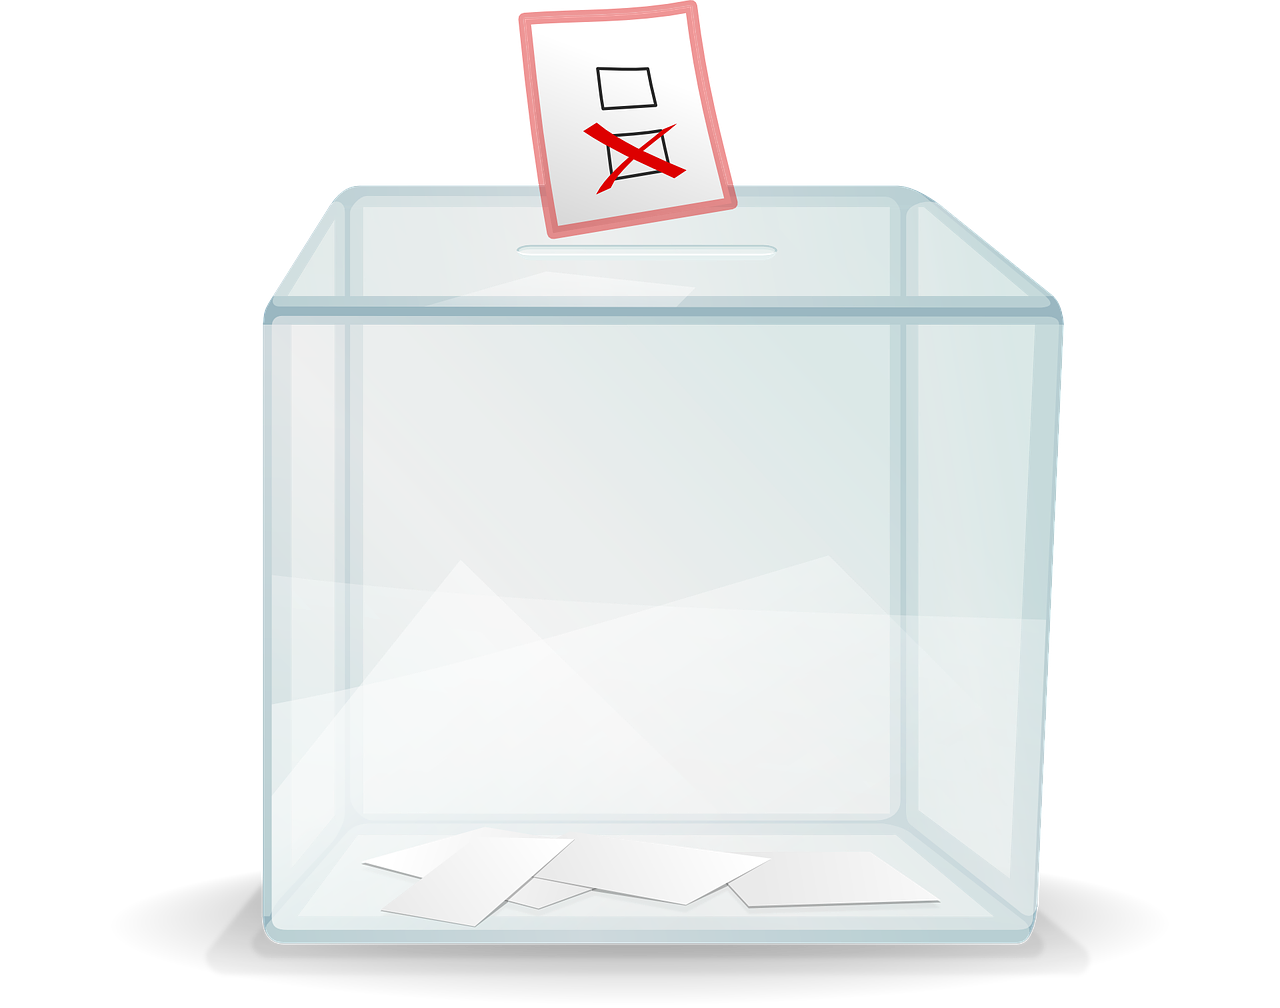 urne pour voter